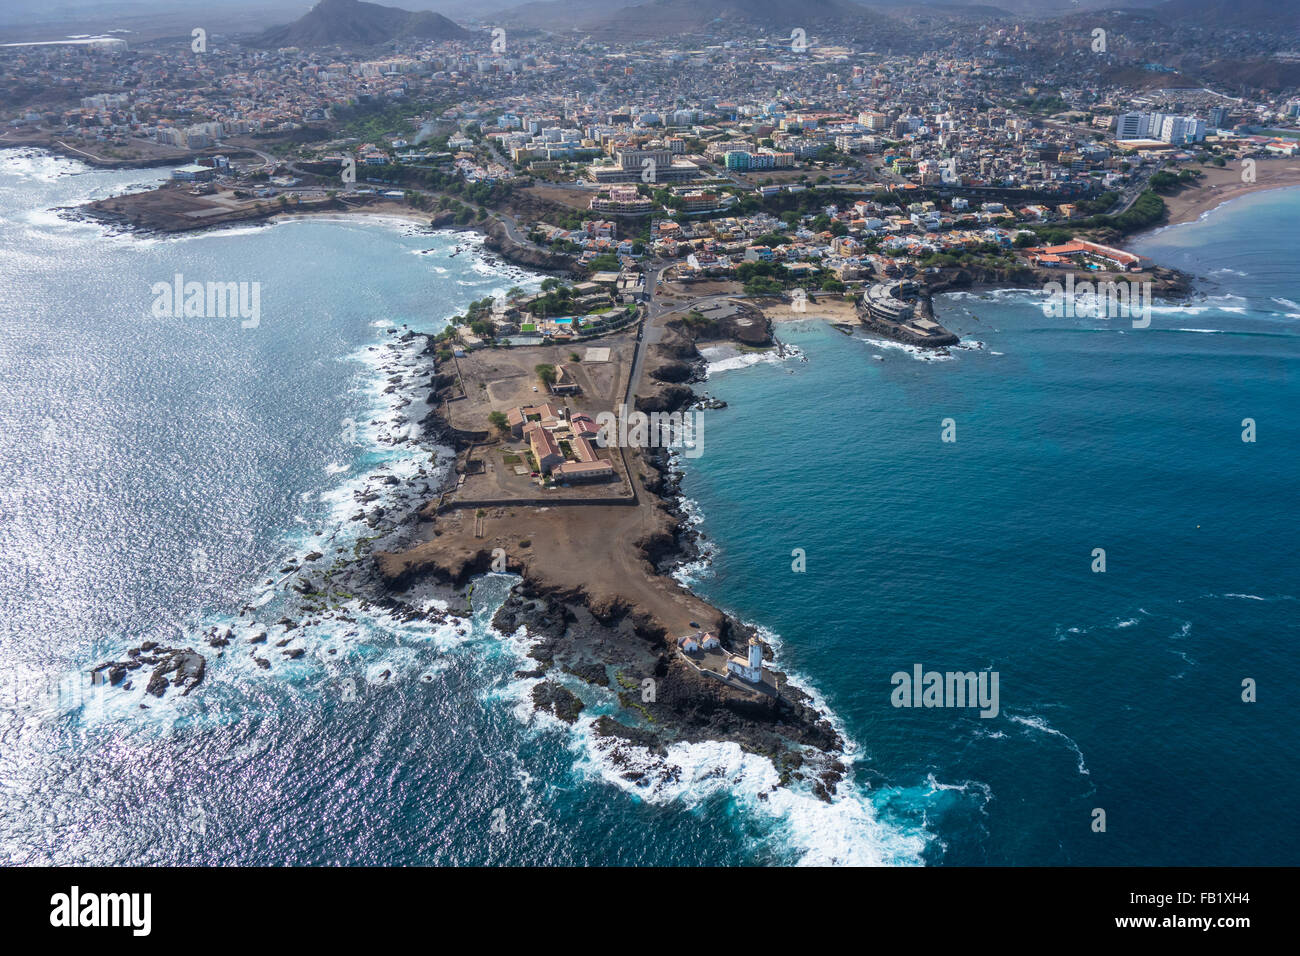 Aerial view of Praia city in Santiago - Capital of Cape Verde Islands -  Cabo Verde Stock Photo - Alamy